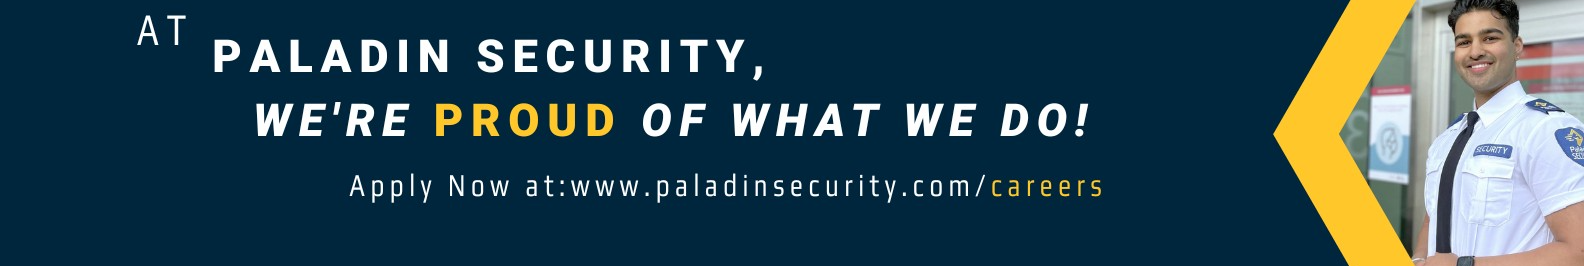 Paladin Security background